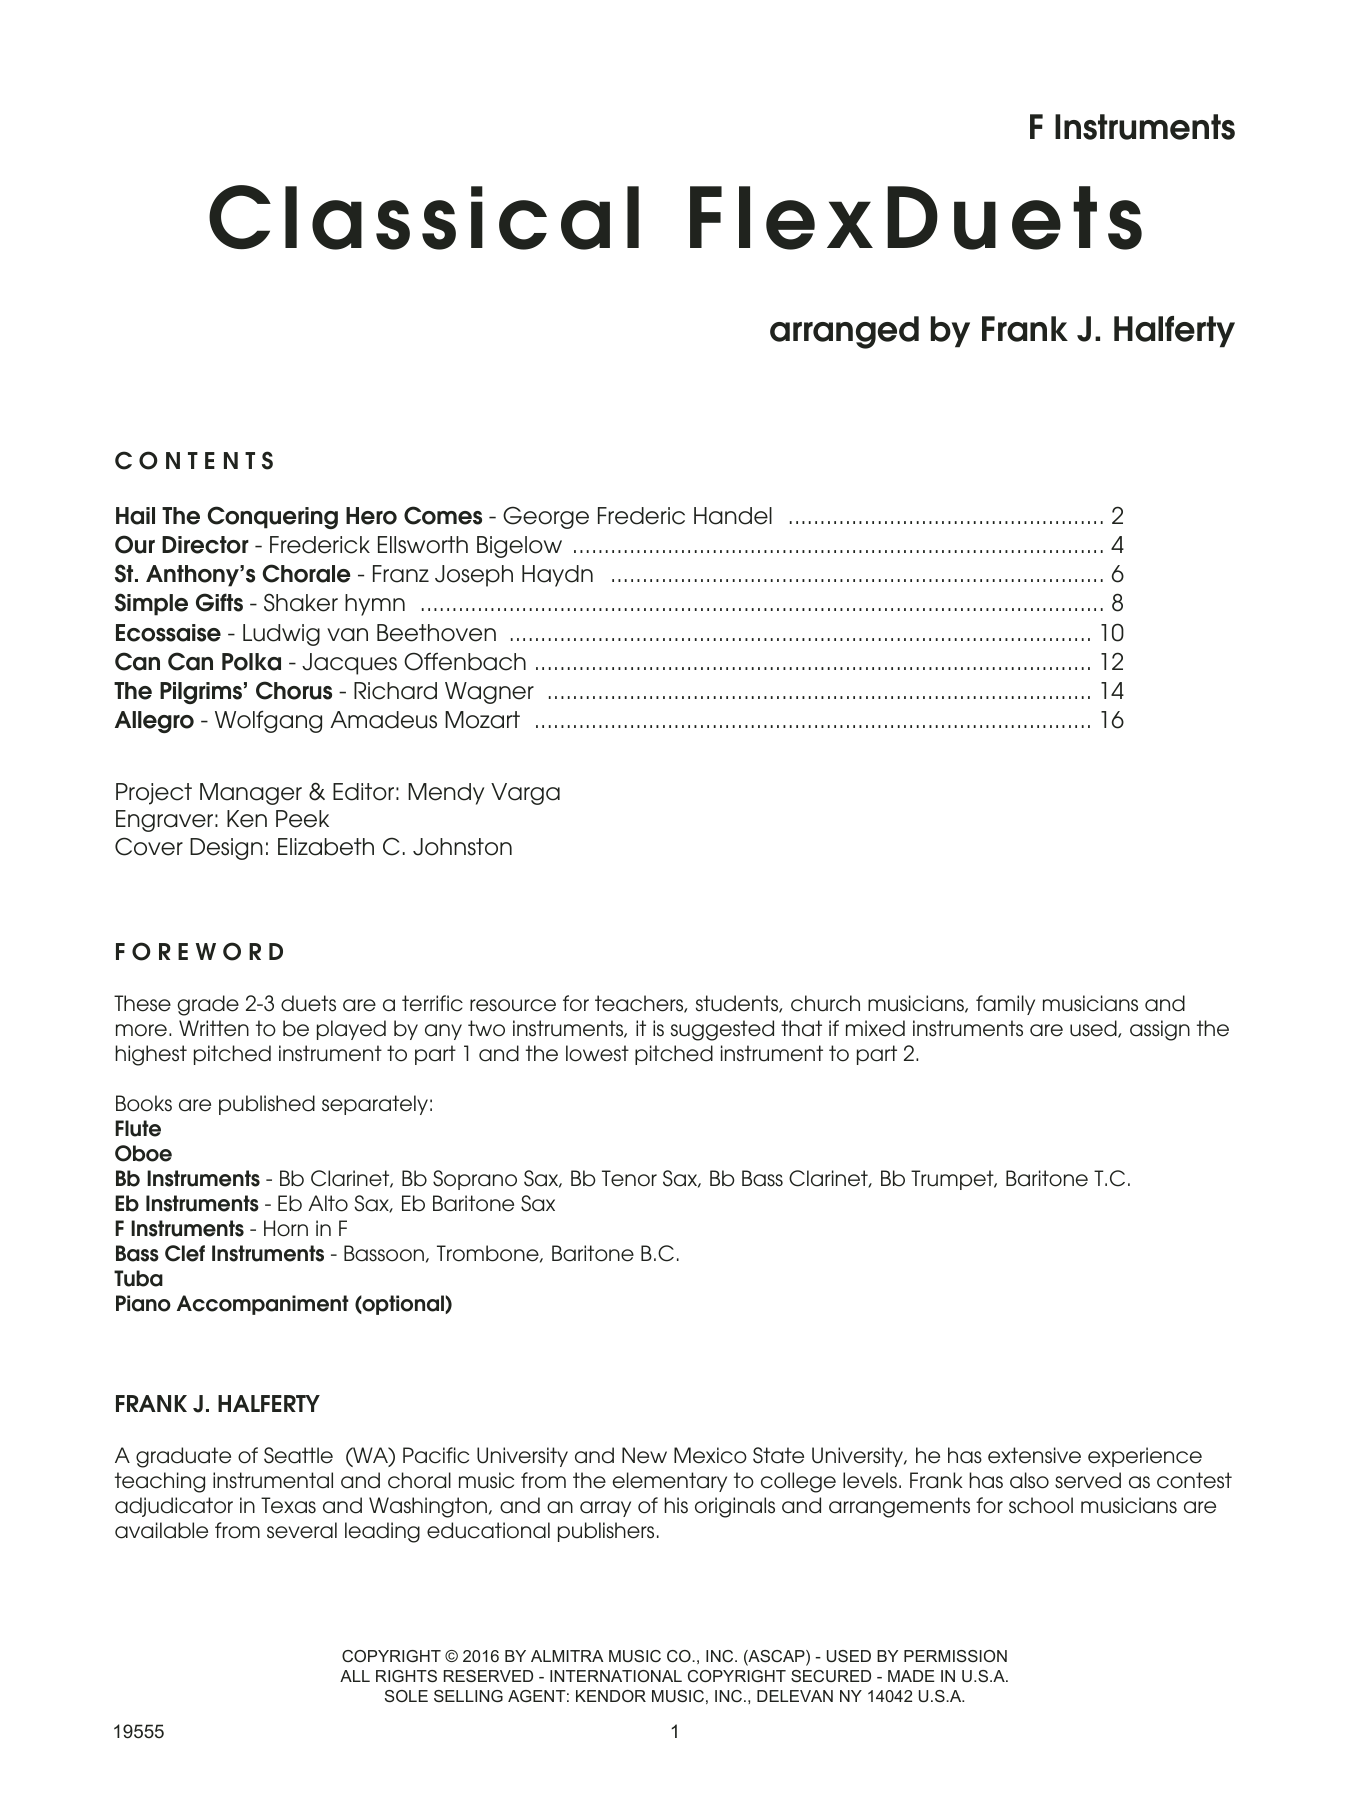 Classical FlexDuets - F Instruments sheet music